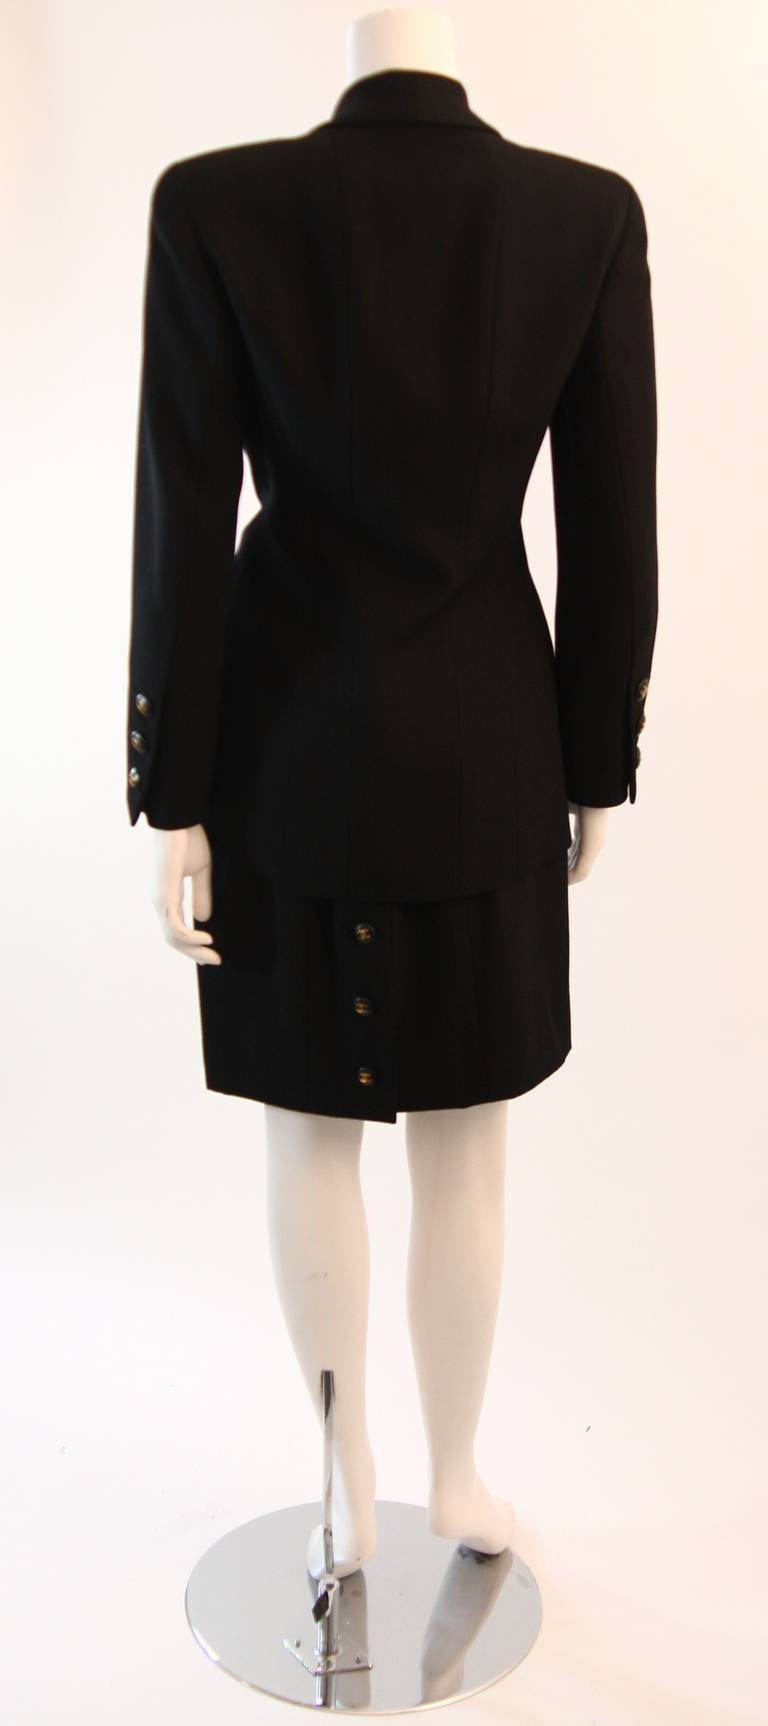 Marvelous Chanel Black Shawl Neck Skirt Suit Size 42 3